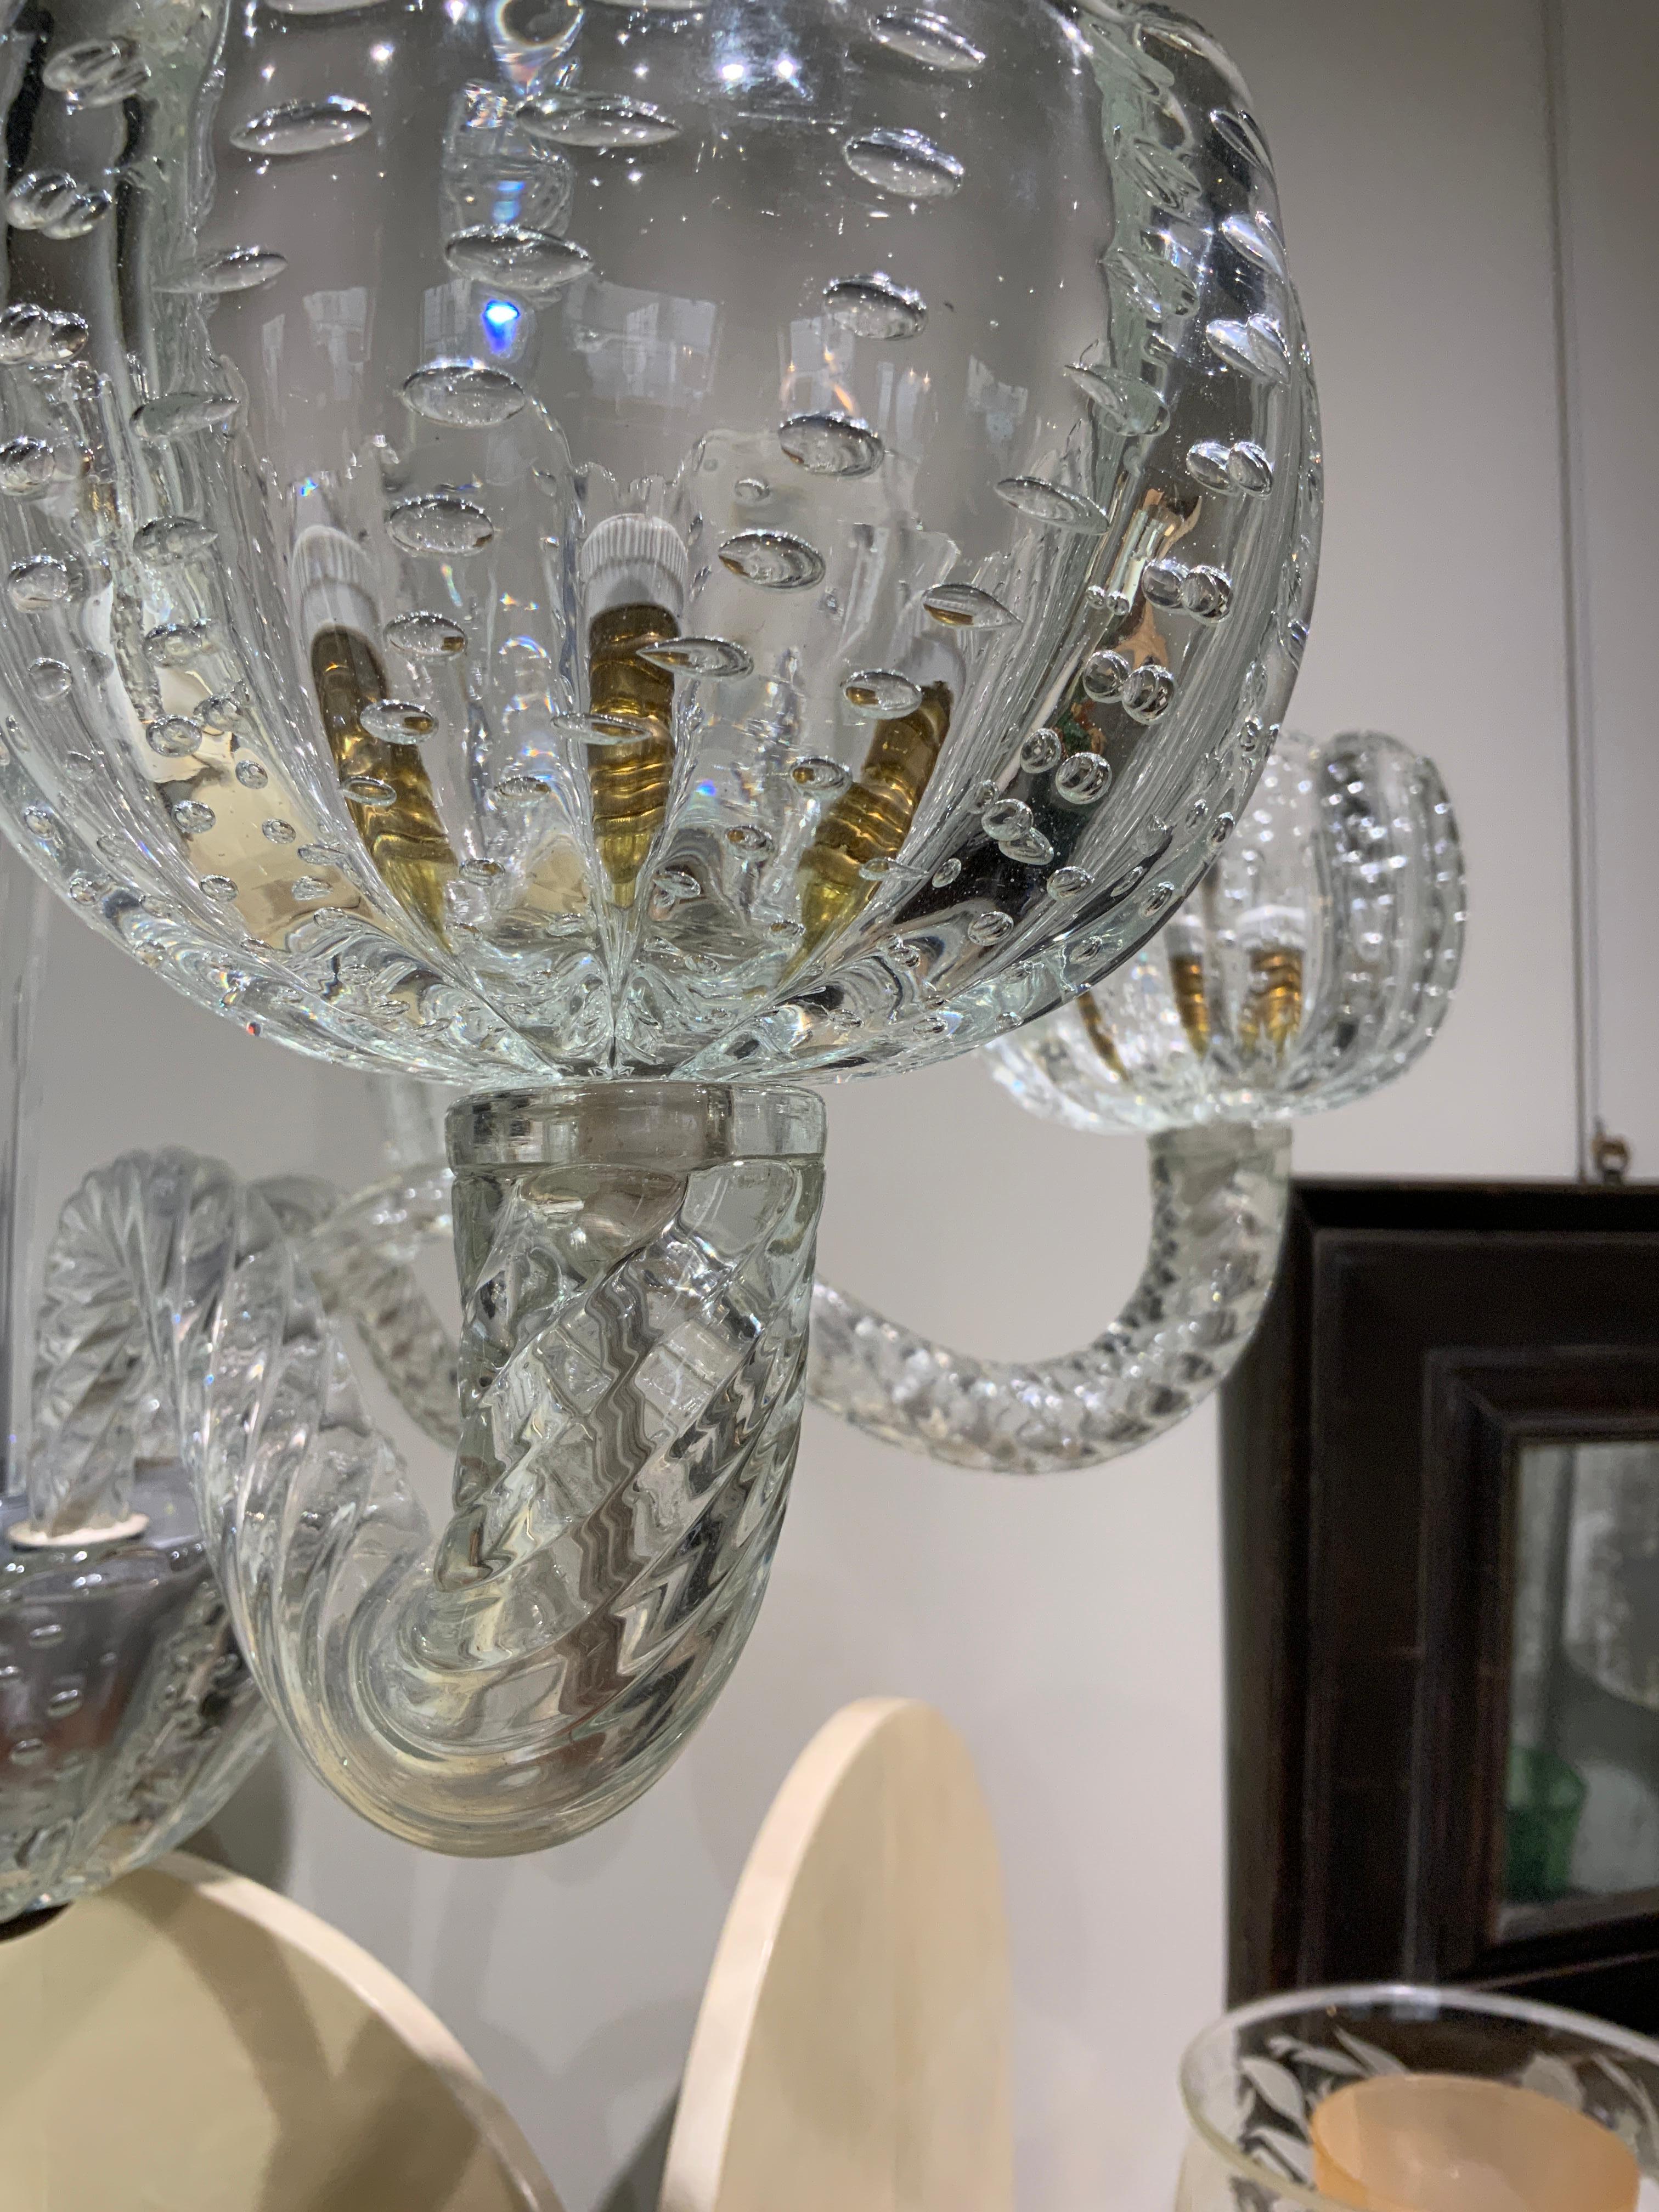 A very elegant Murano chandelier by Seguso Venice circa 1940
Glass “bullicante” 
6 arms 